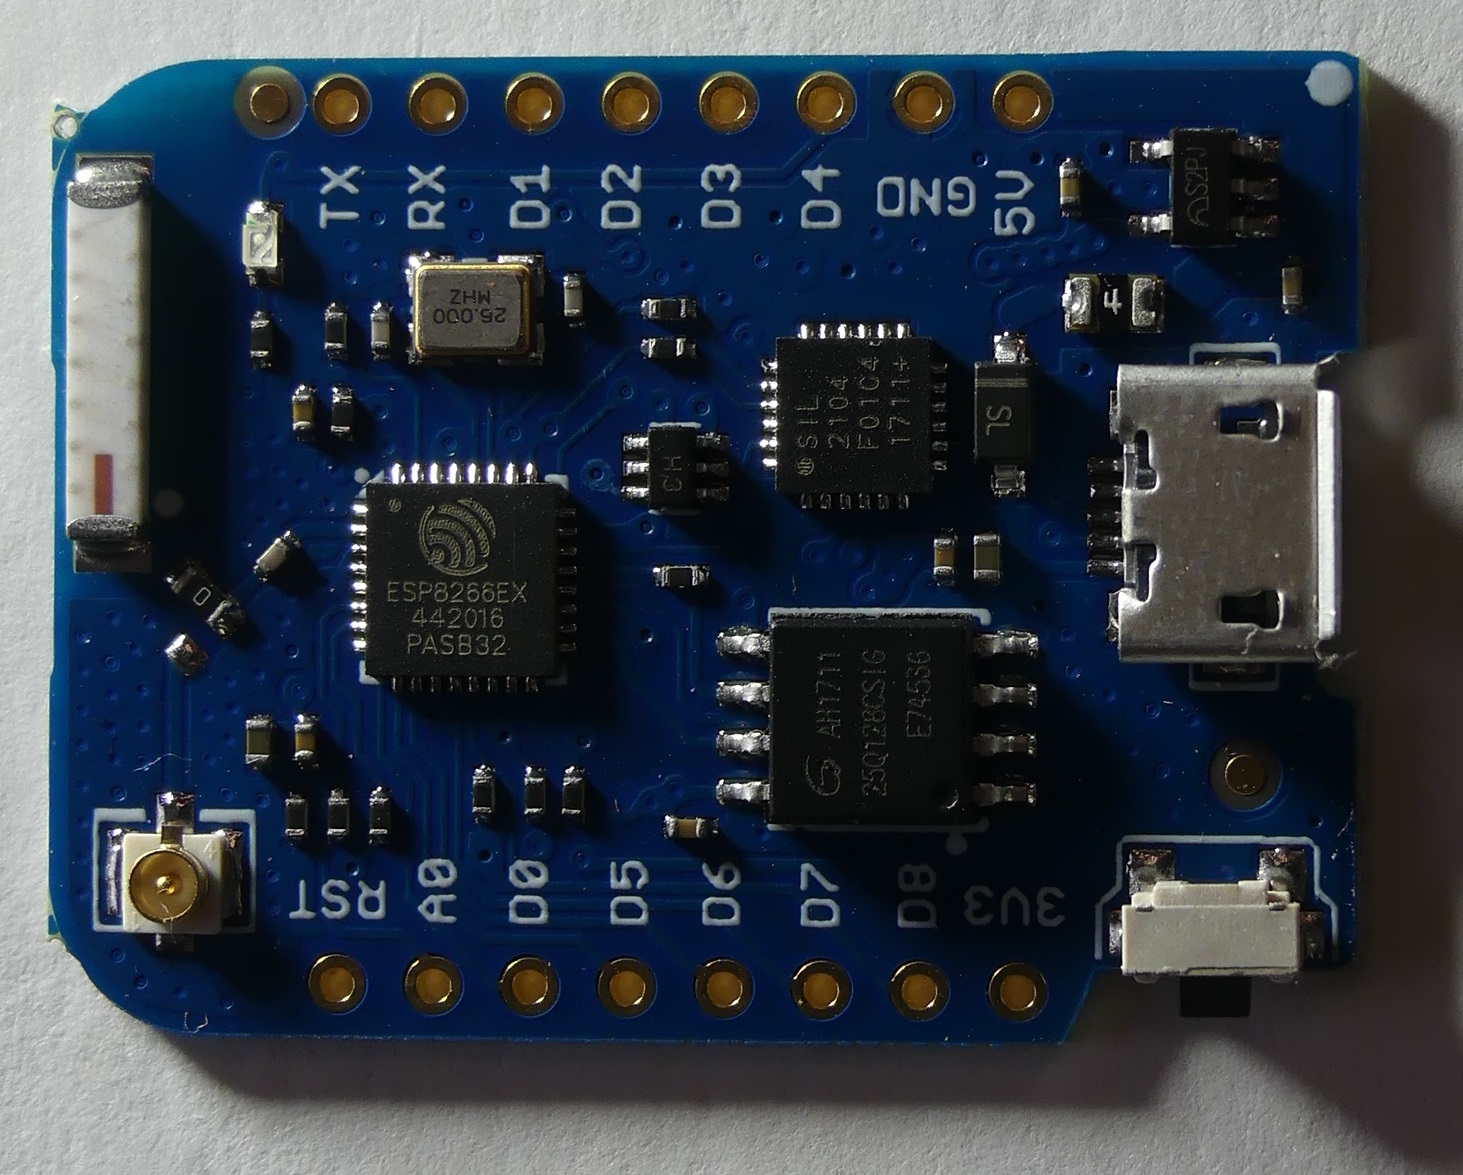 Details about   WeMos D1 MINI Pro WiFi Entwicklung Board ESP8266 Motherboard Nodemcu Module L1SA 